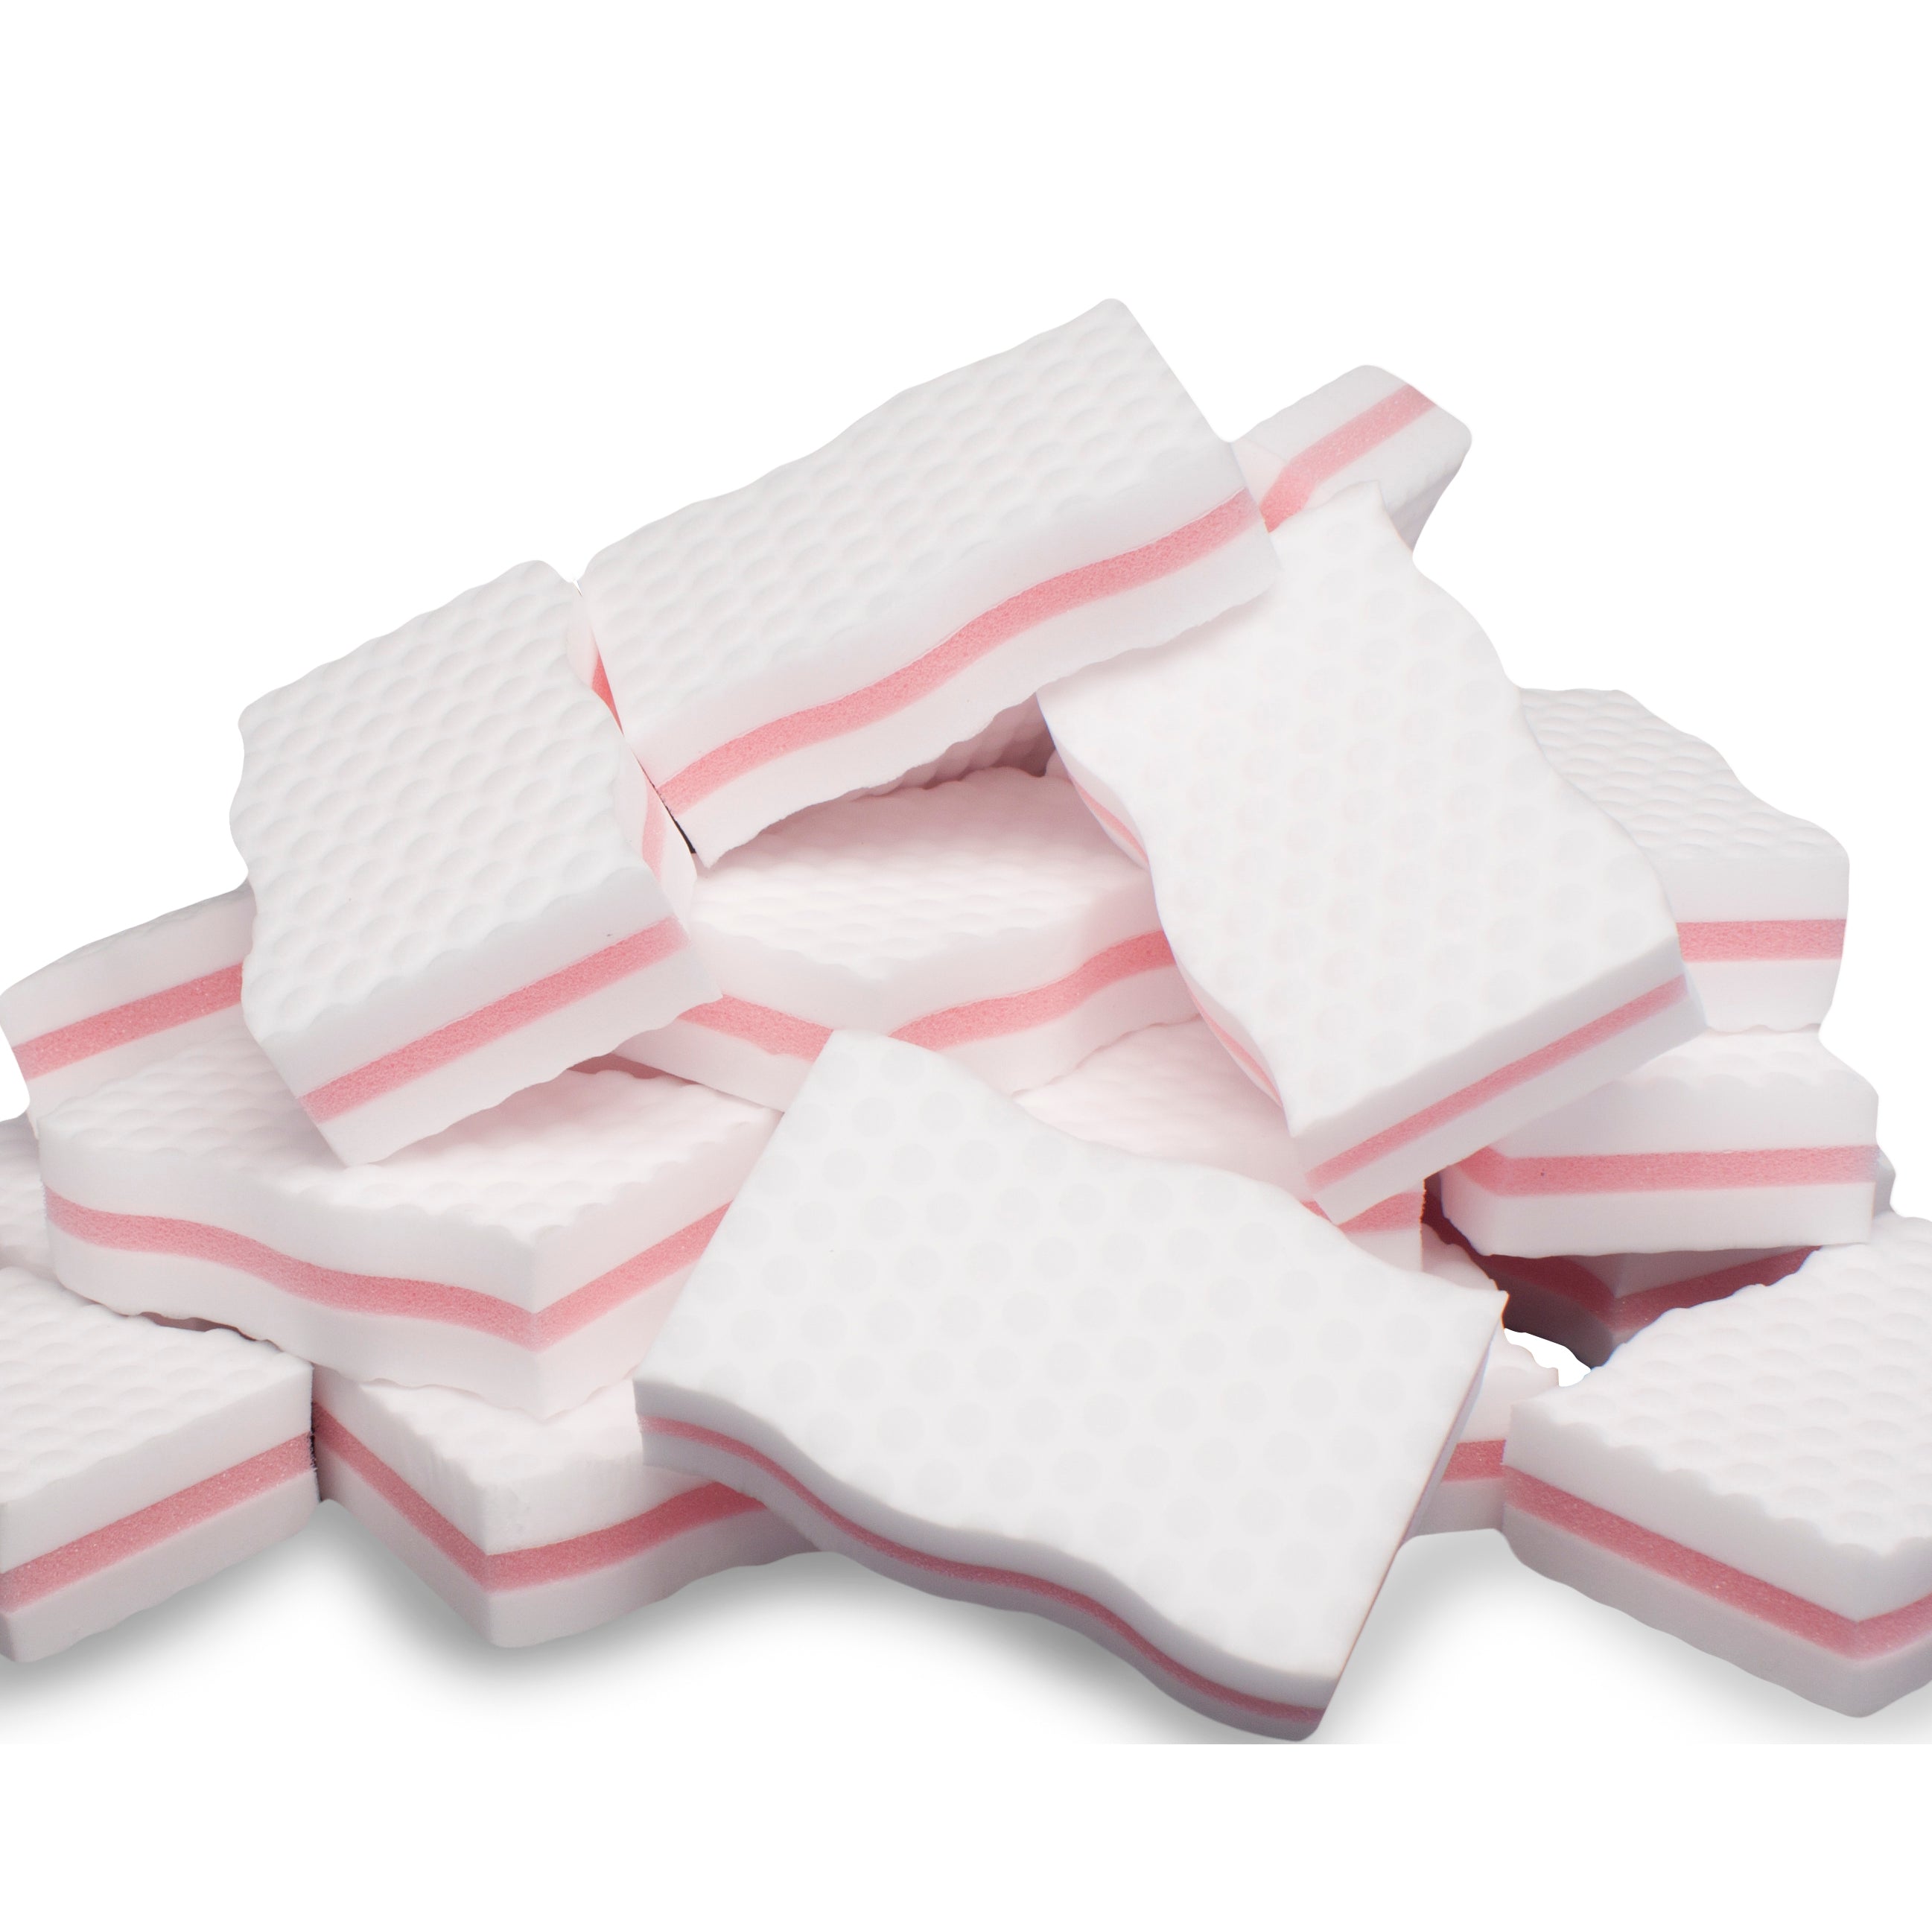 LTWHOME Cuty Pink Interlayer Magic Cleaning Wave Type Sponge High Density Melamine Foam 3.93 Inch X 2.36 Inch X 1 Inch (Pack of 100)